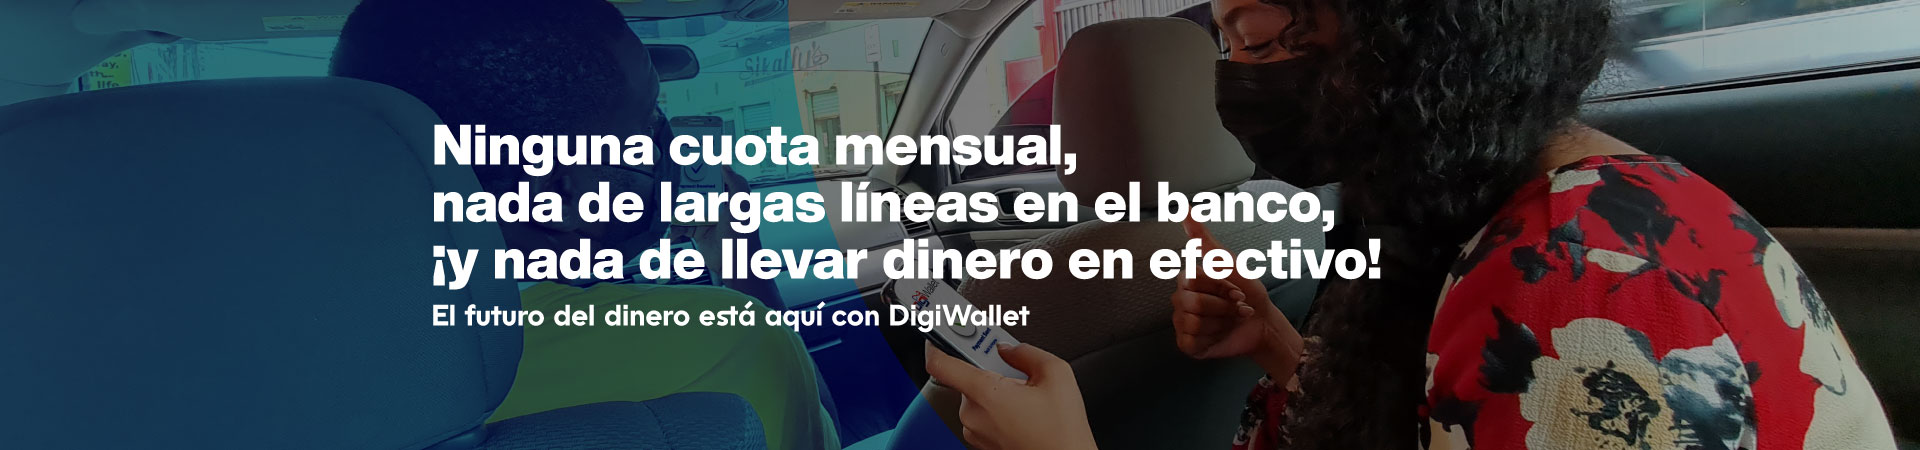 DigiWallet-Website-Spanish_Customer-Banner